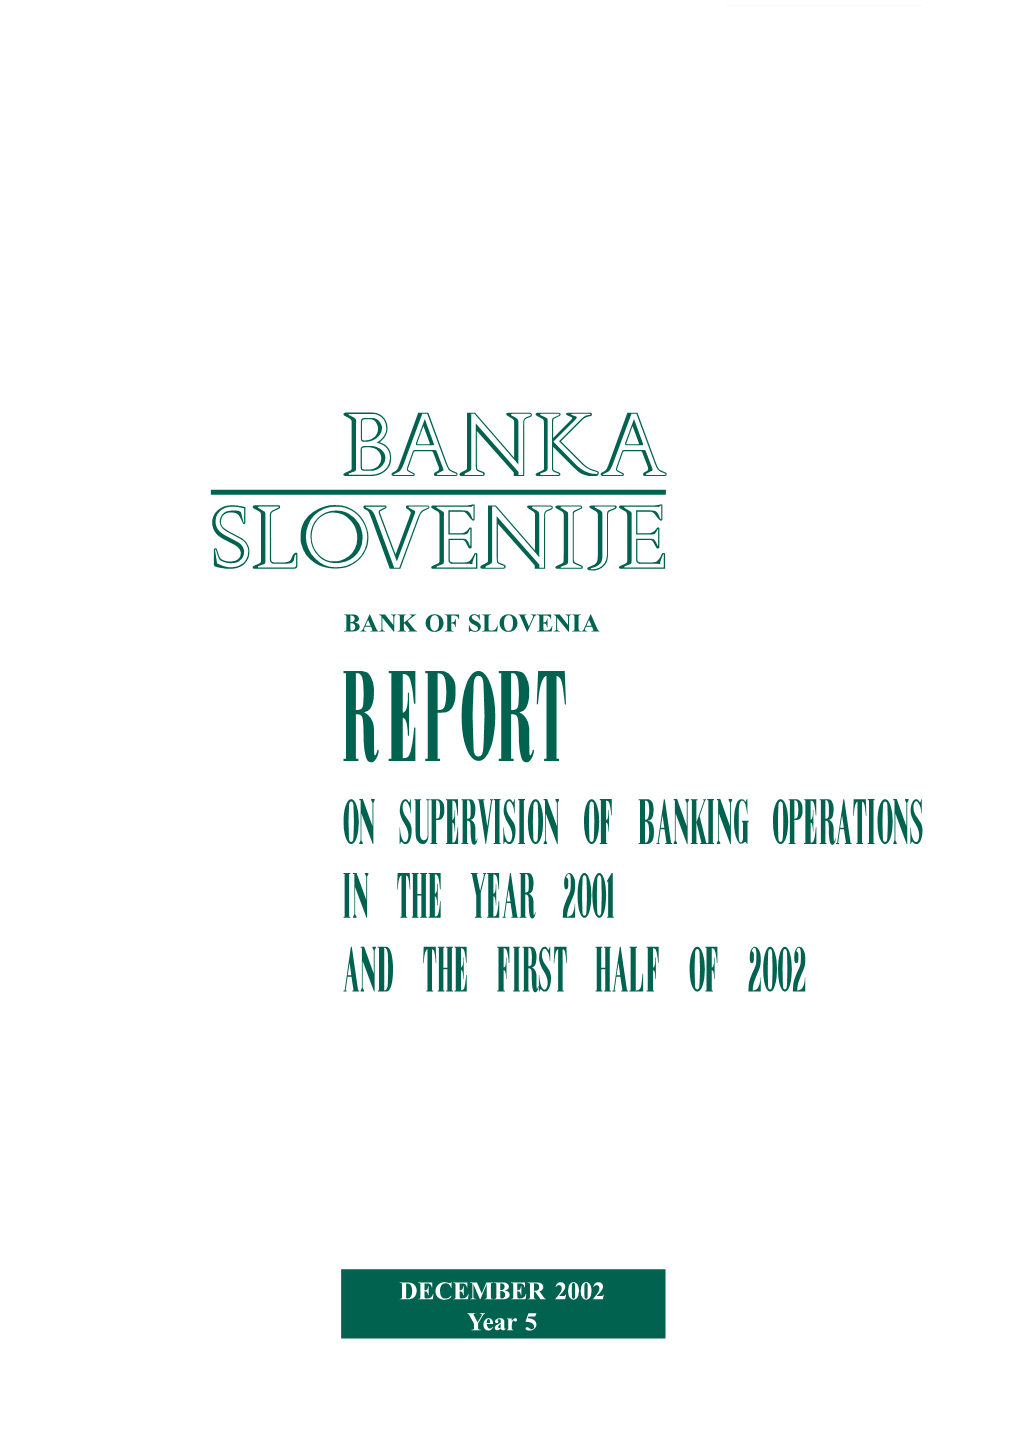 Banka Slovenije Bank of Slovenia